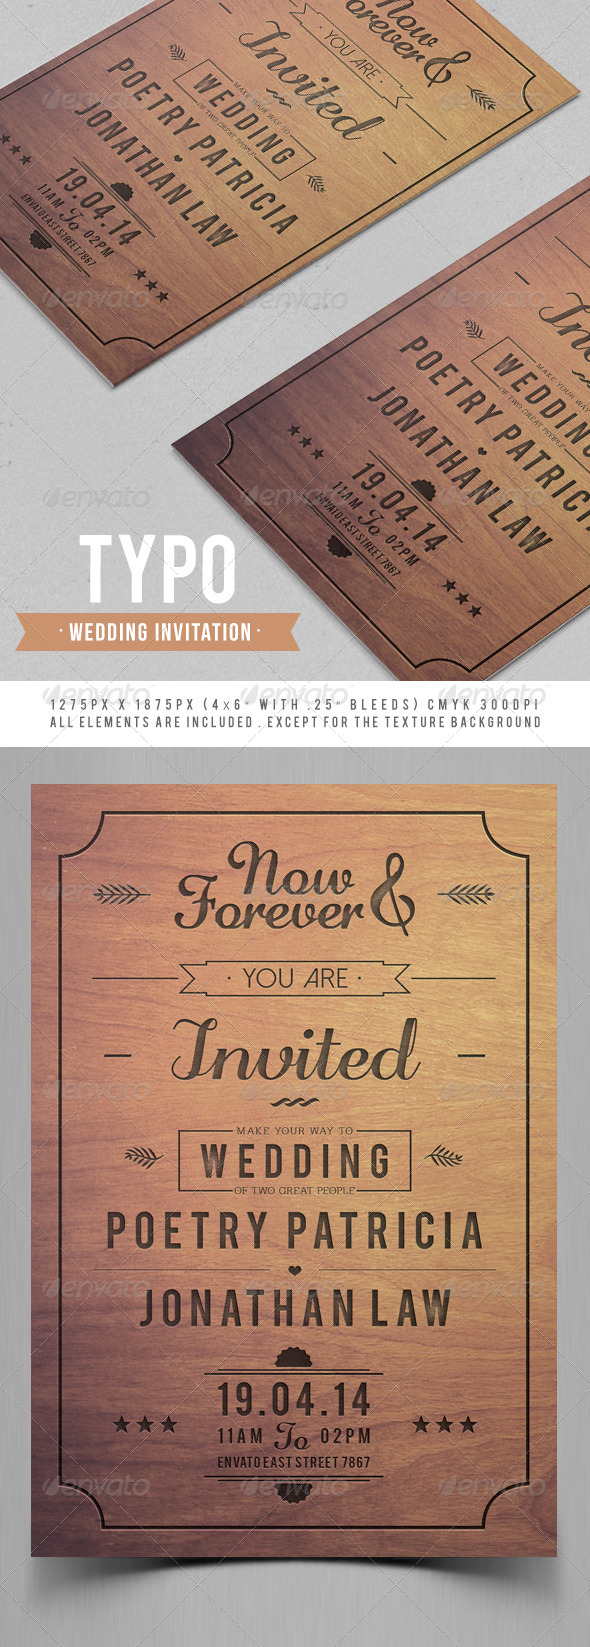 Typo Wedding Invitation